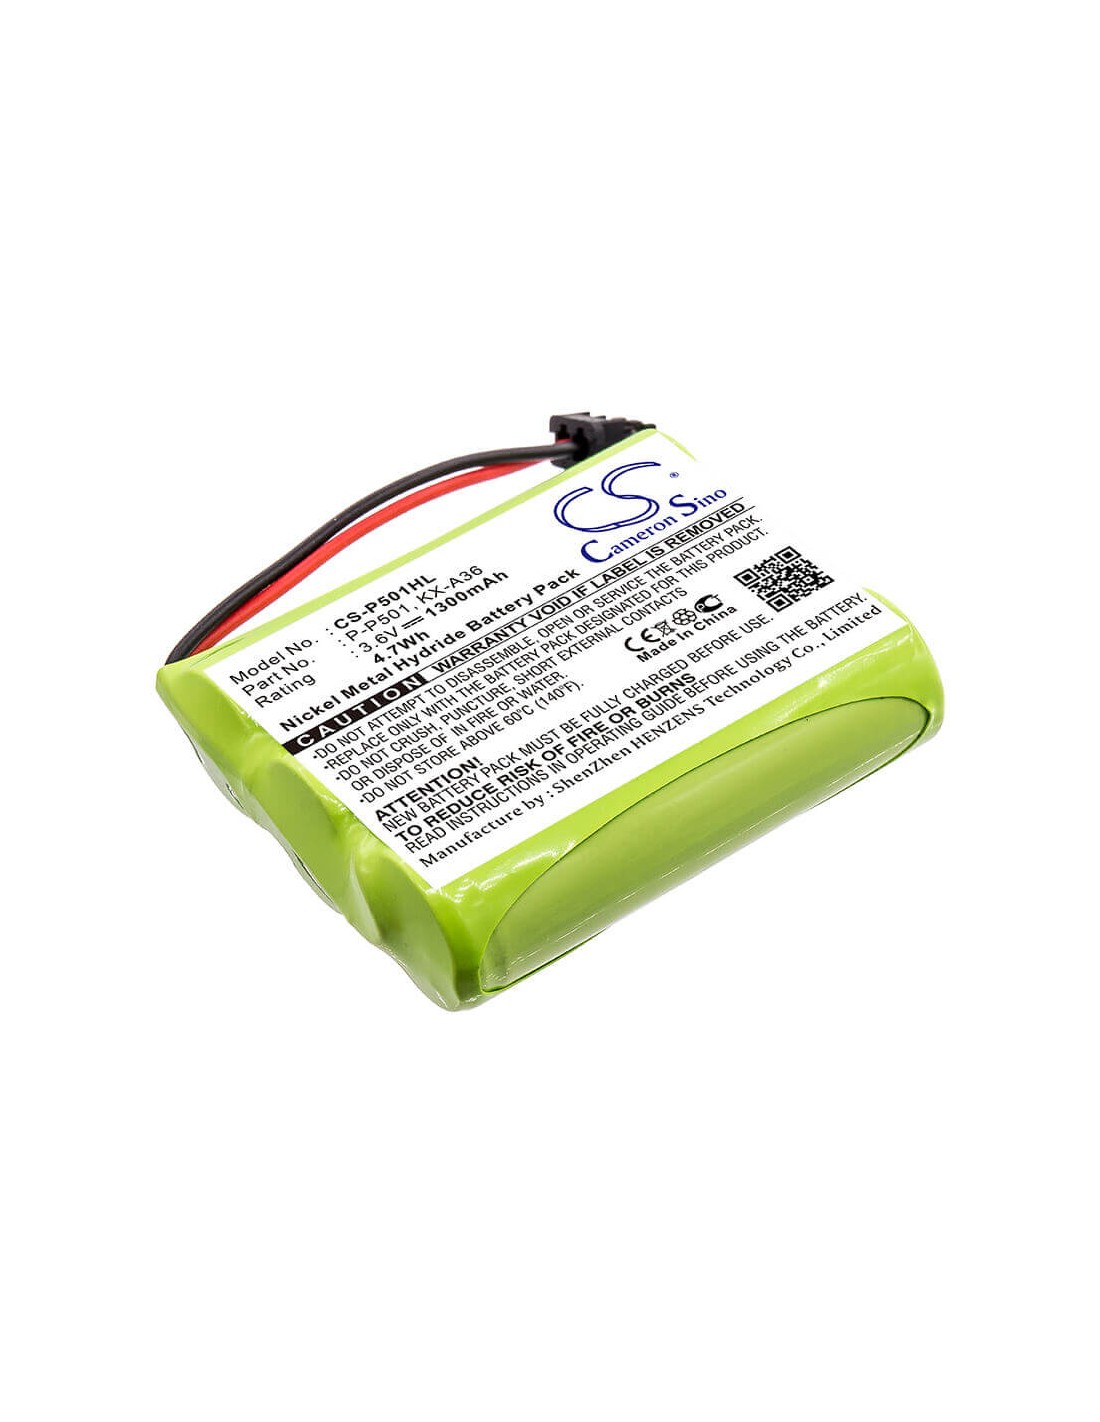 Battery for Sbc, Cl200, Cl300, Cl400, Cl405, 3.6V, 1300mAh - 4.68Wh